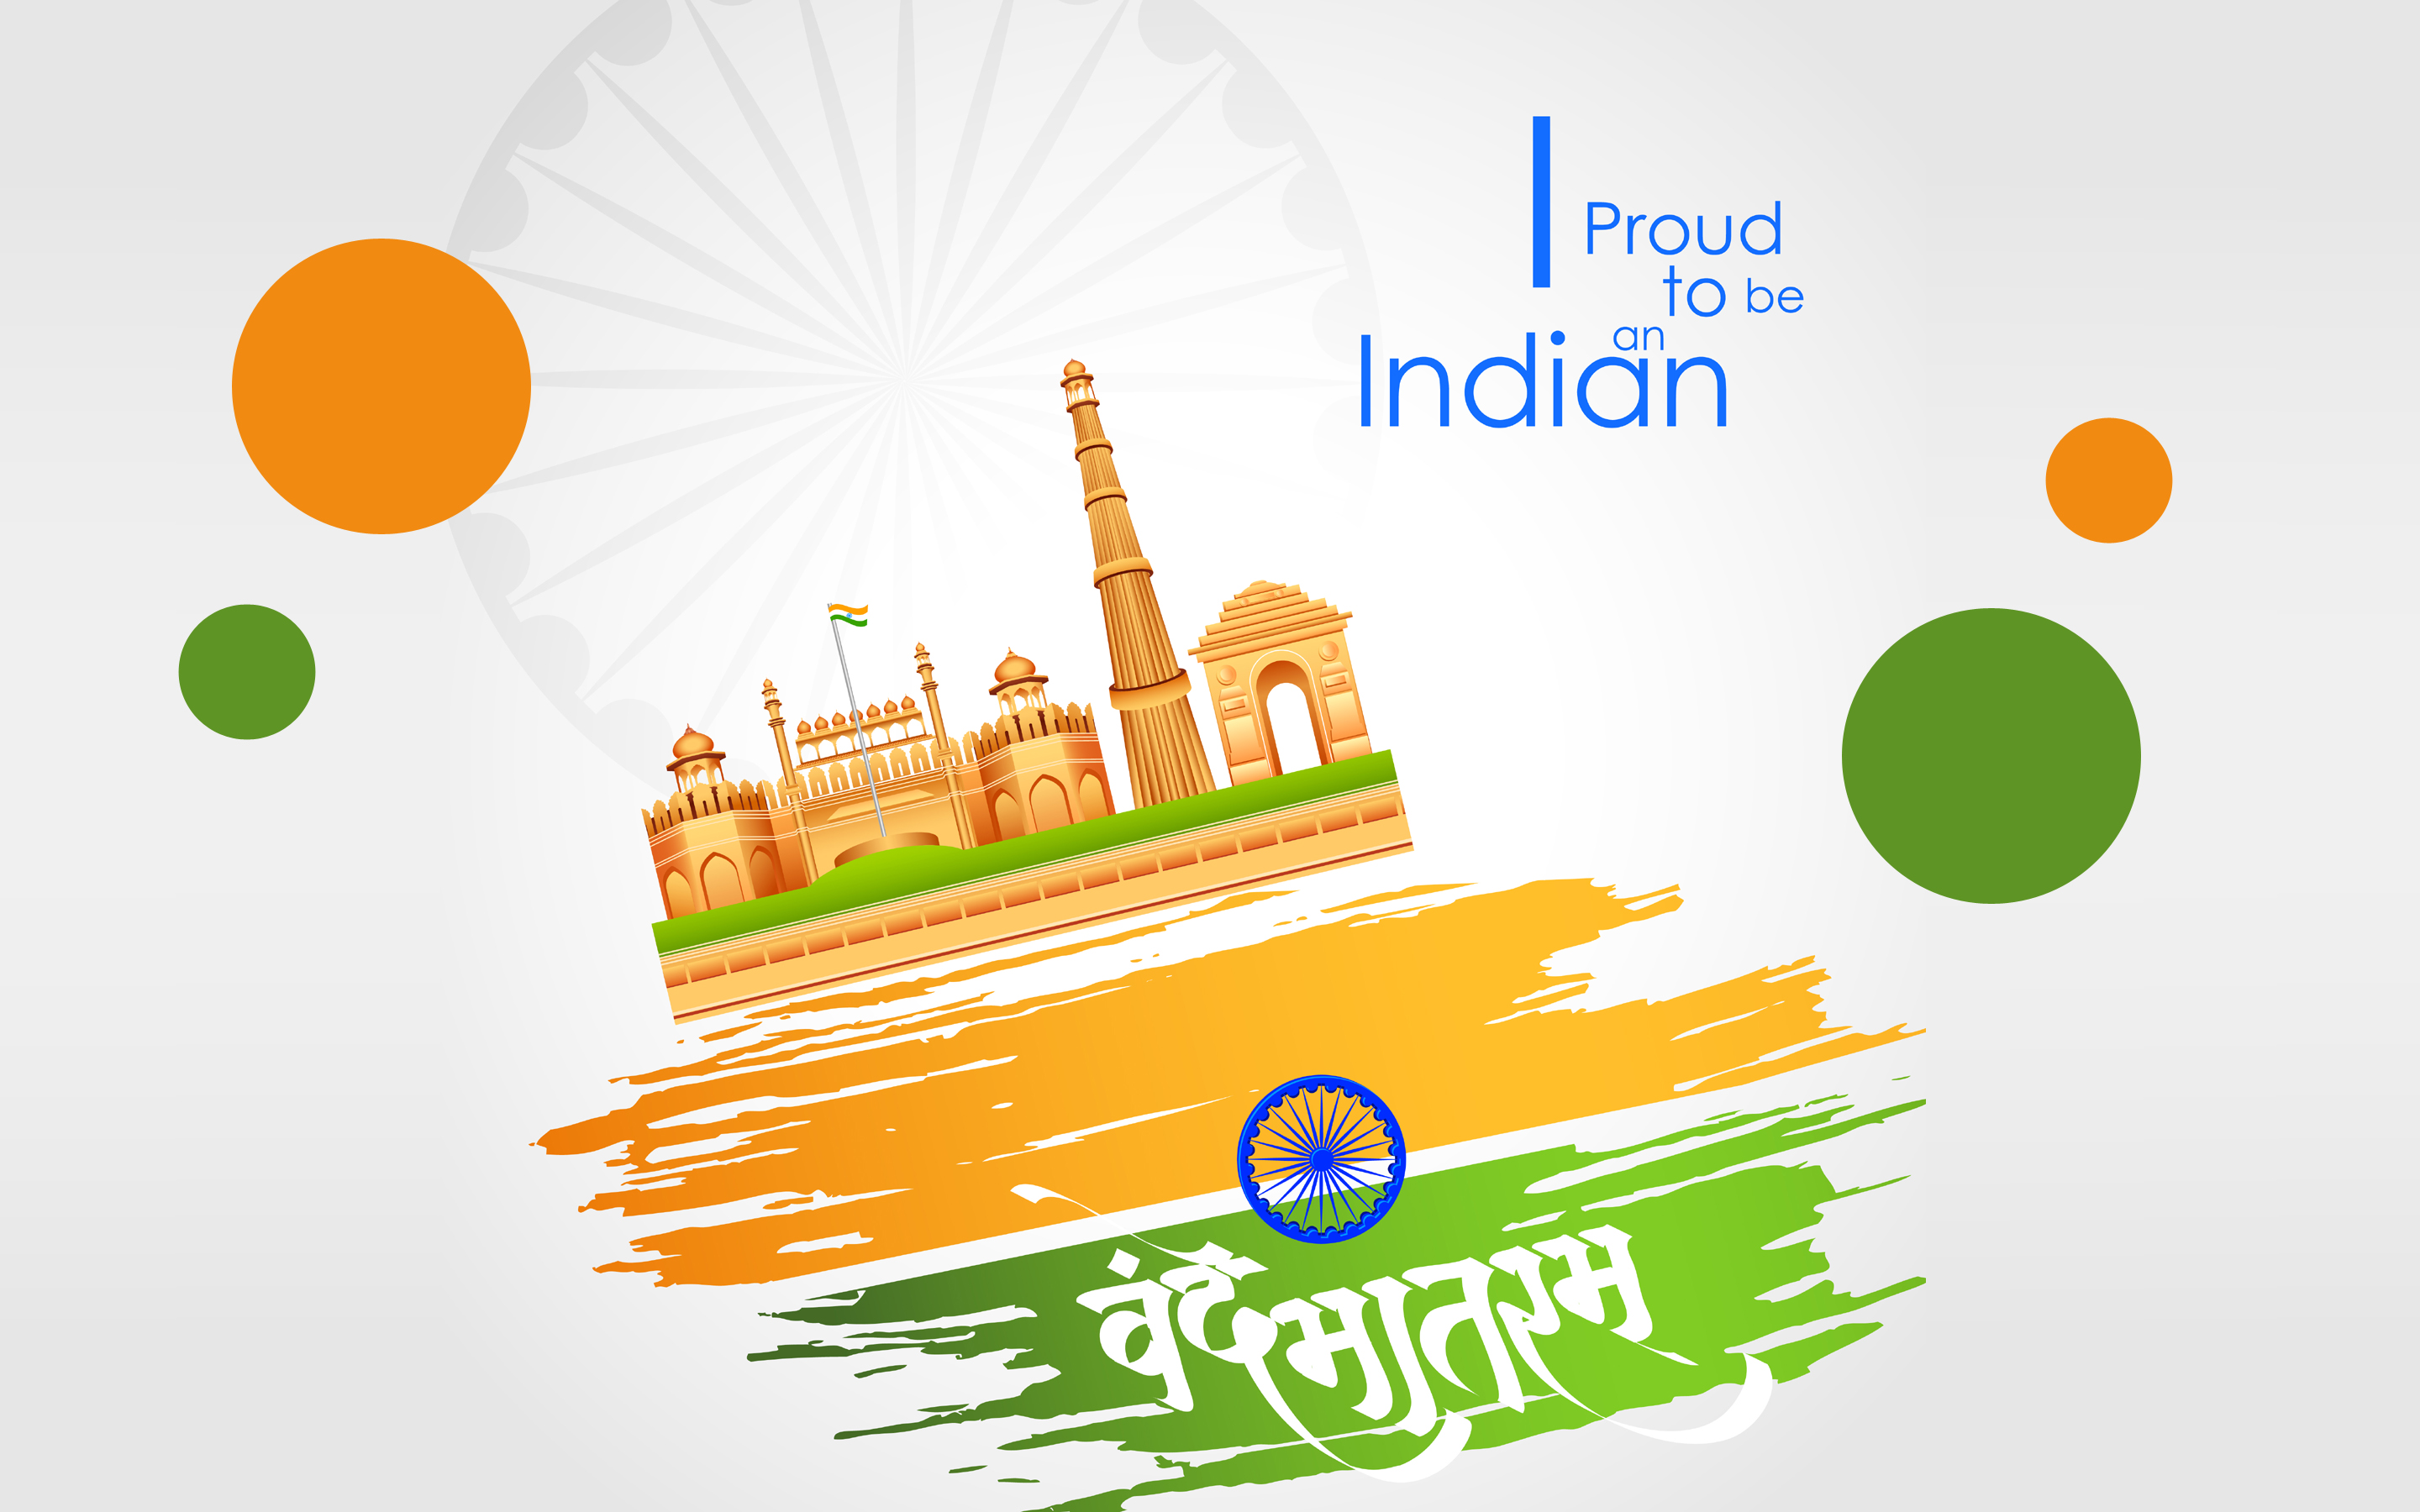 India Republic Day Image For Whatsapp Dp Profile Wallpaper